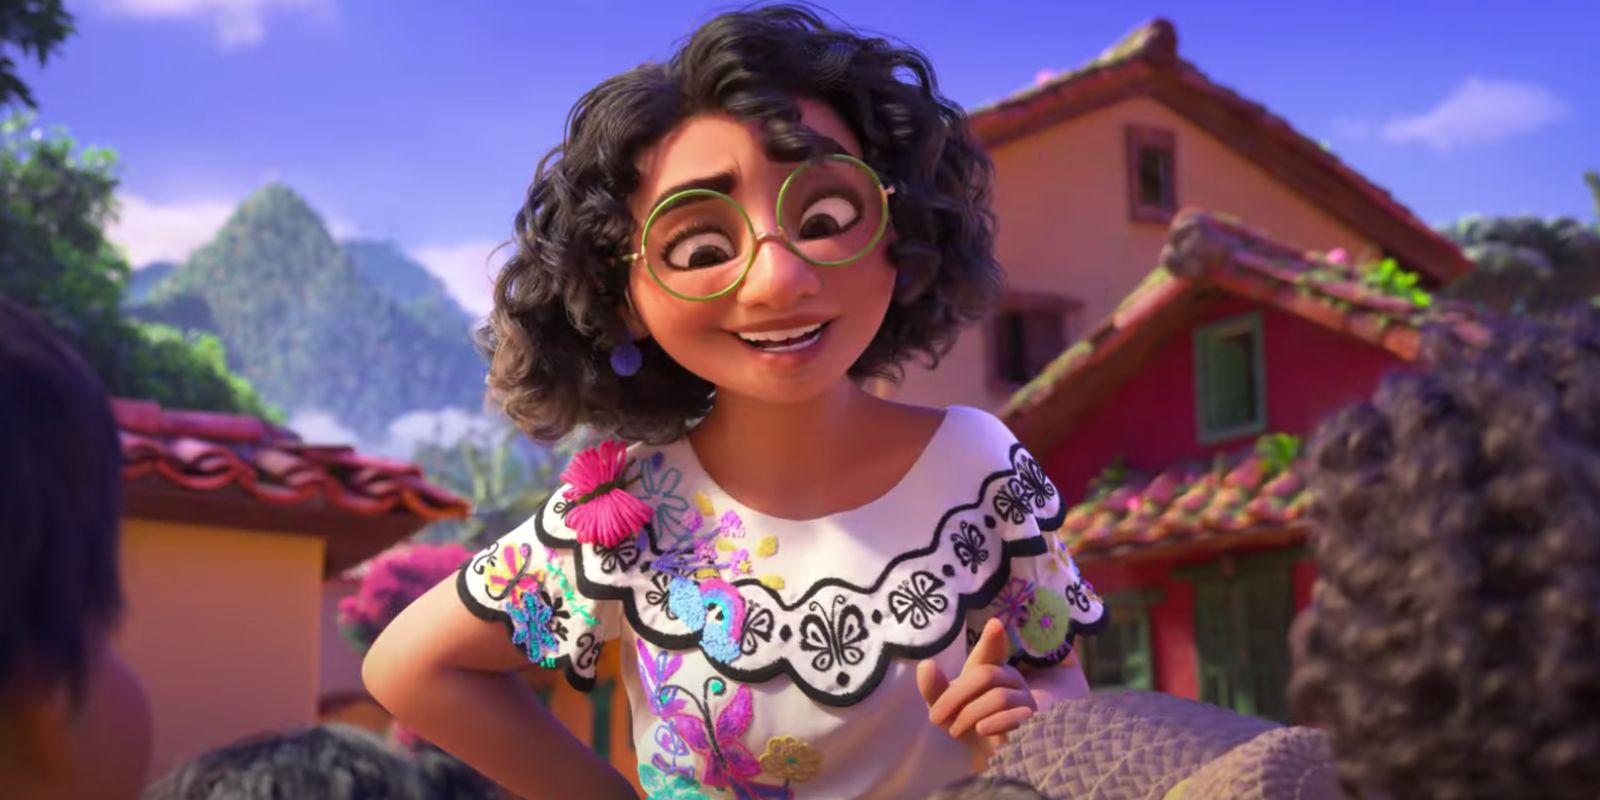 Mirabel looks down on some children in Disney's Encanto.